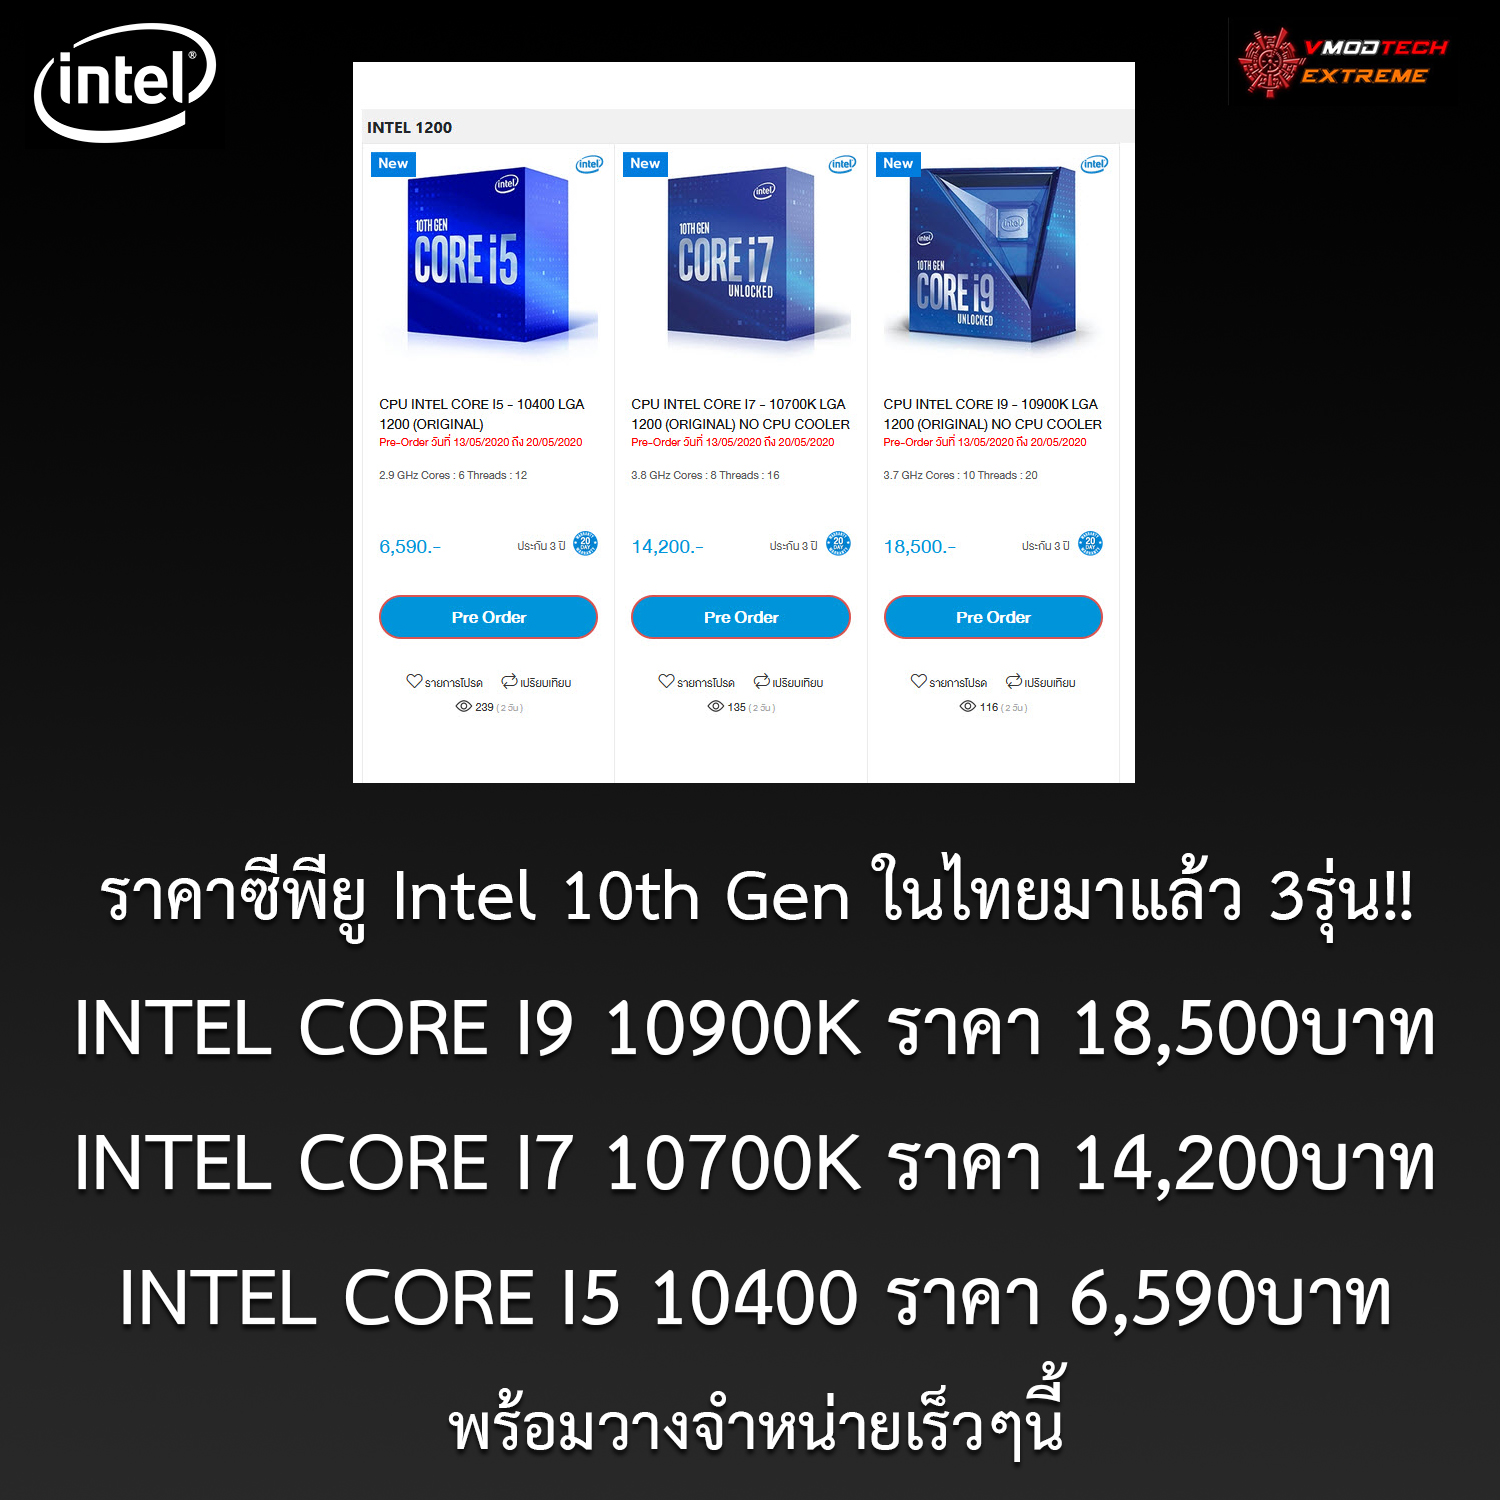 intel 10th gen price list thai by advice ราคาไทยมาแล้ว!! ซีพียู INTEL CORE I9 10900K ราคา 18,500บาท CORE I7 10700K ราคา 14,200บาท CORE I5 10400 ราคา 6,590บาท พร้อมวางจำหน่ายเร็วๆนี้ 